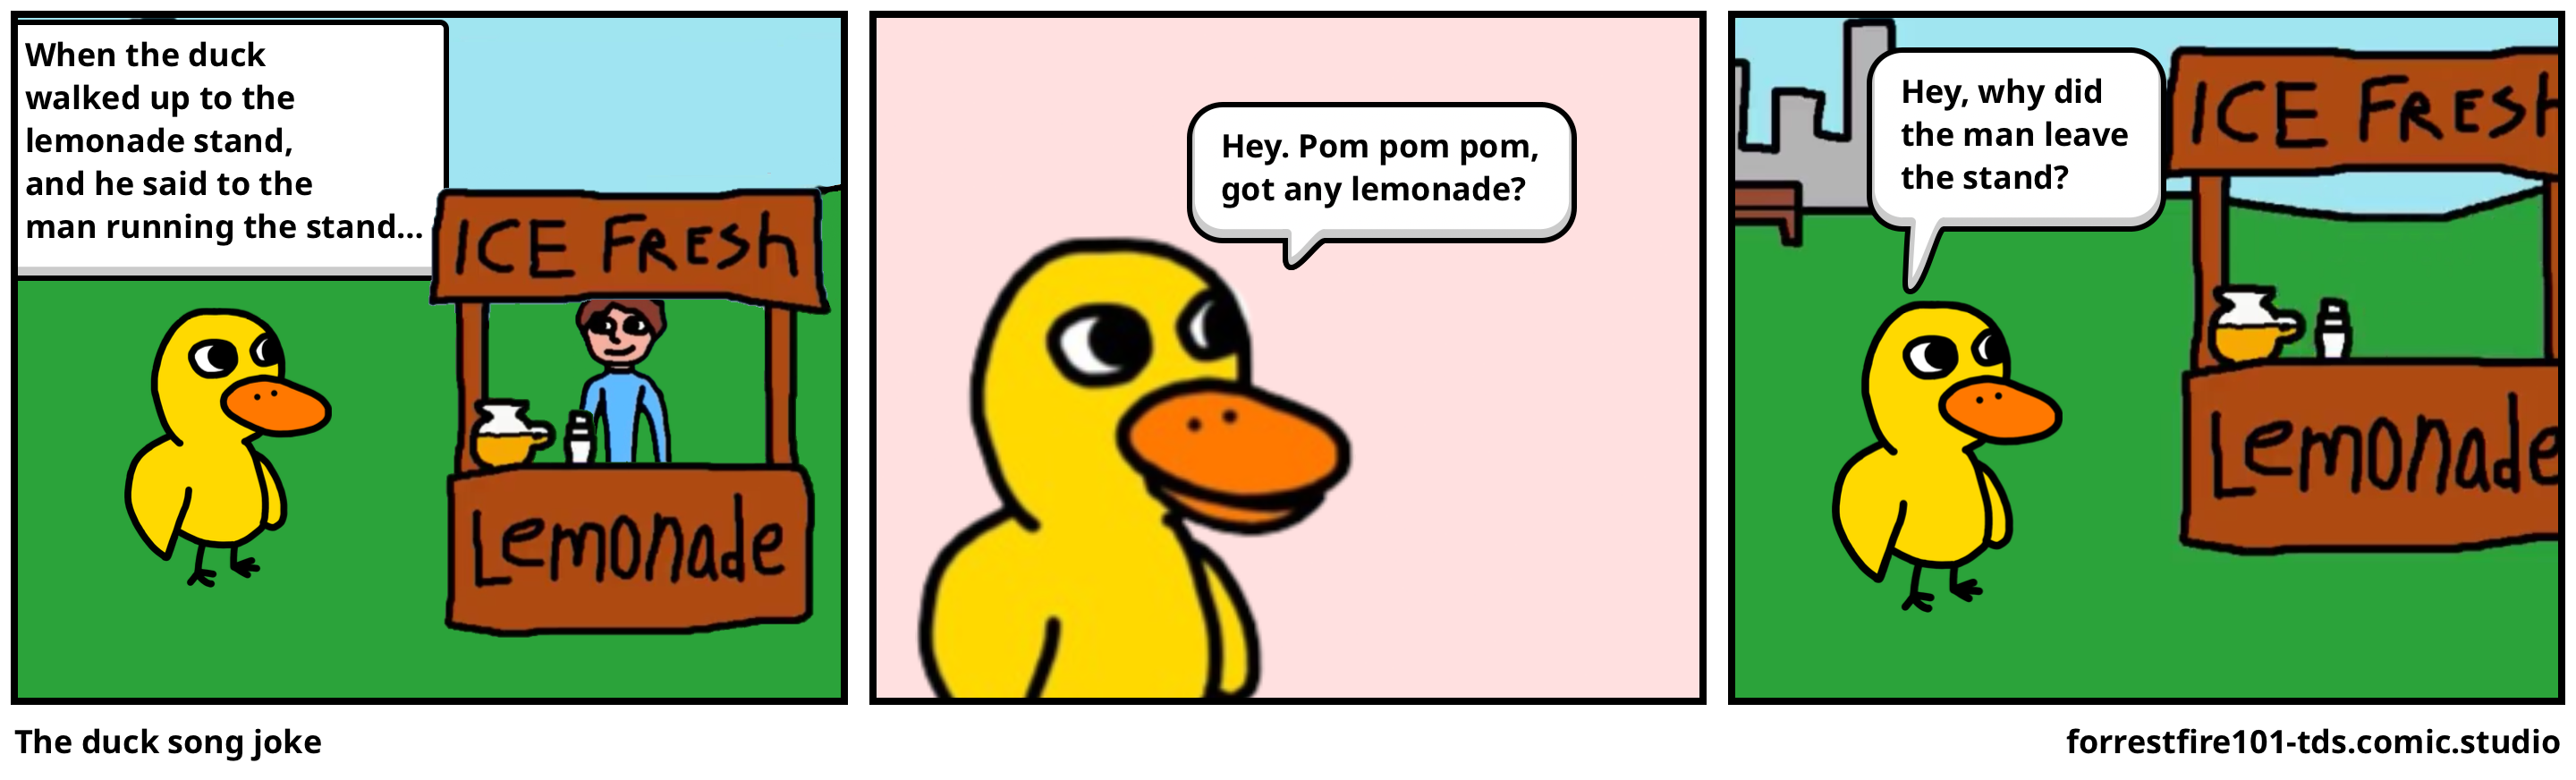 The duck song joke